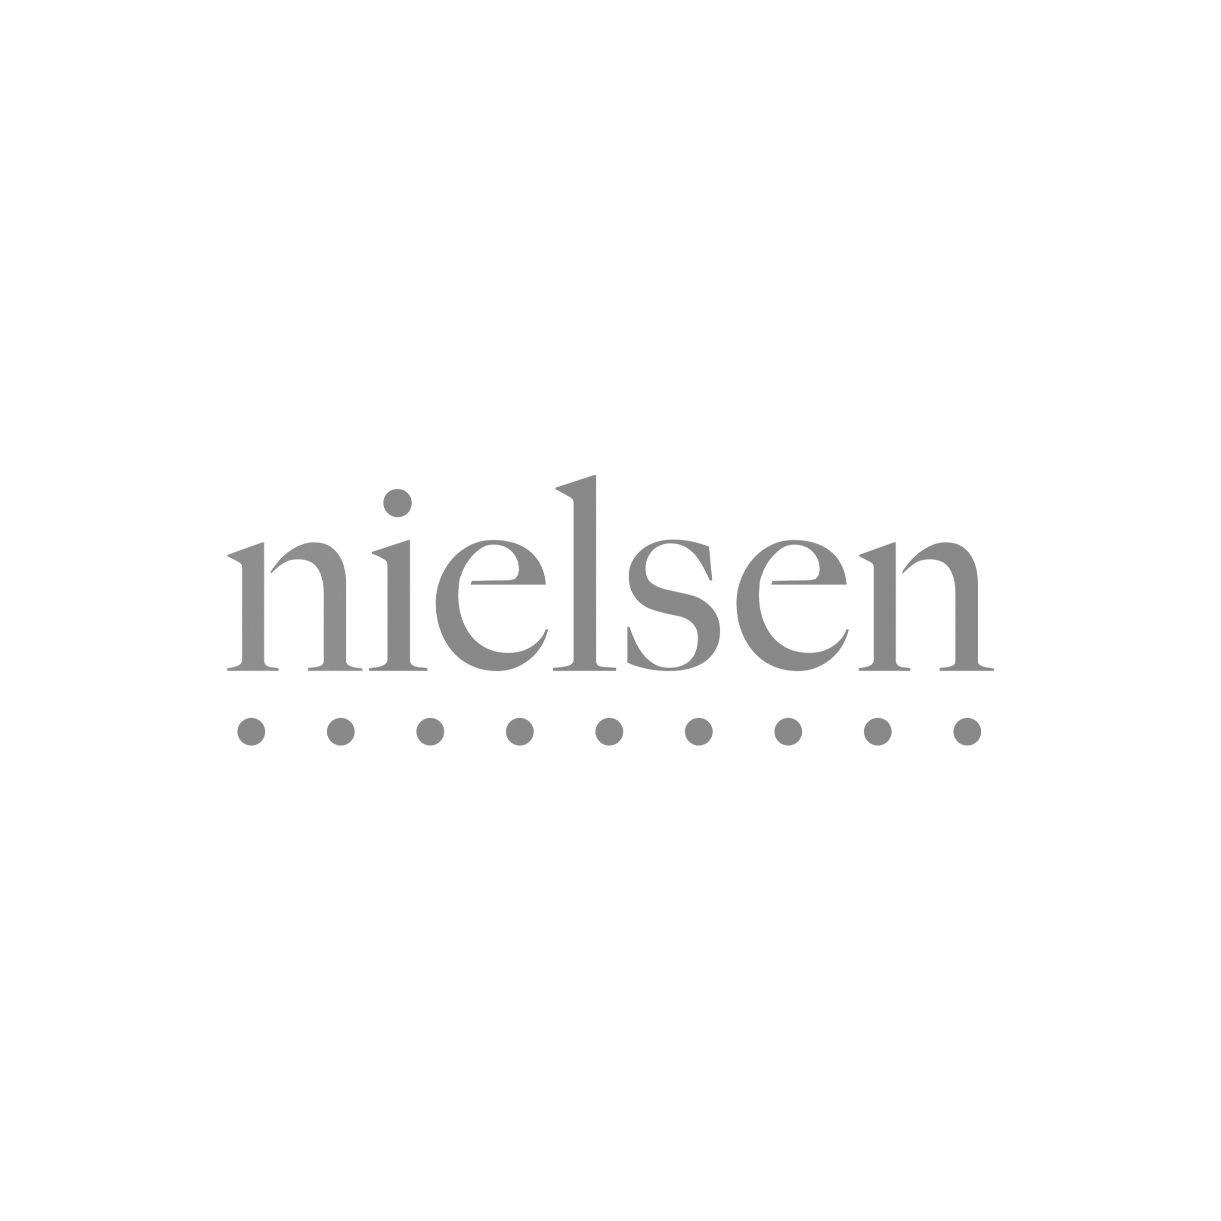 Nielsen - Storygize